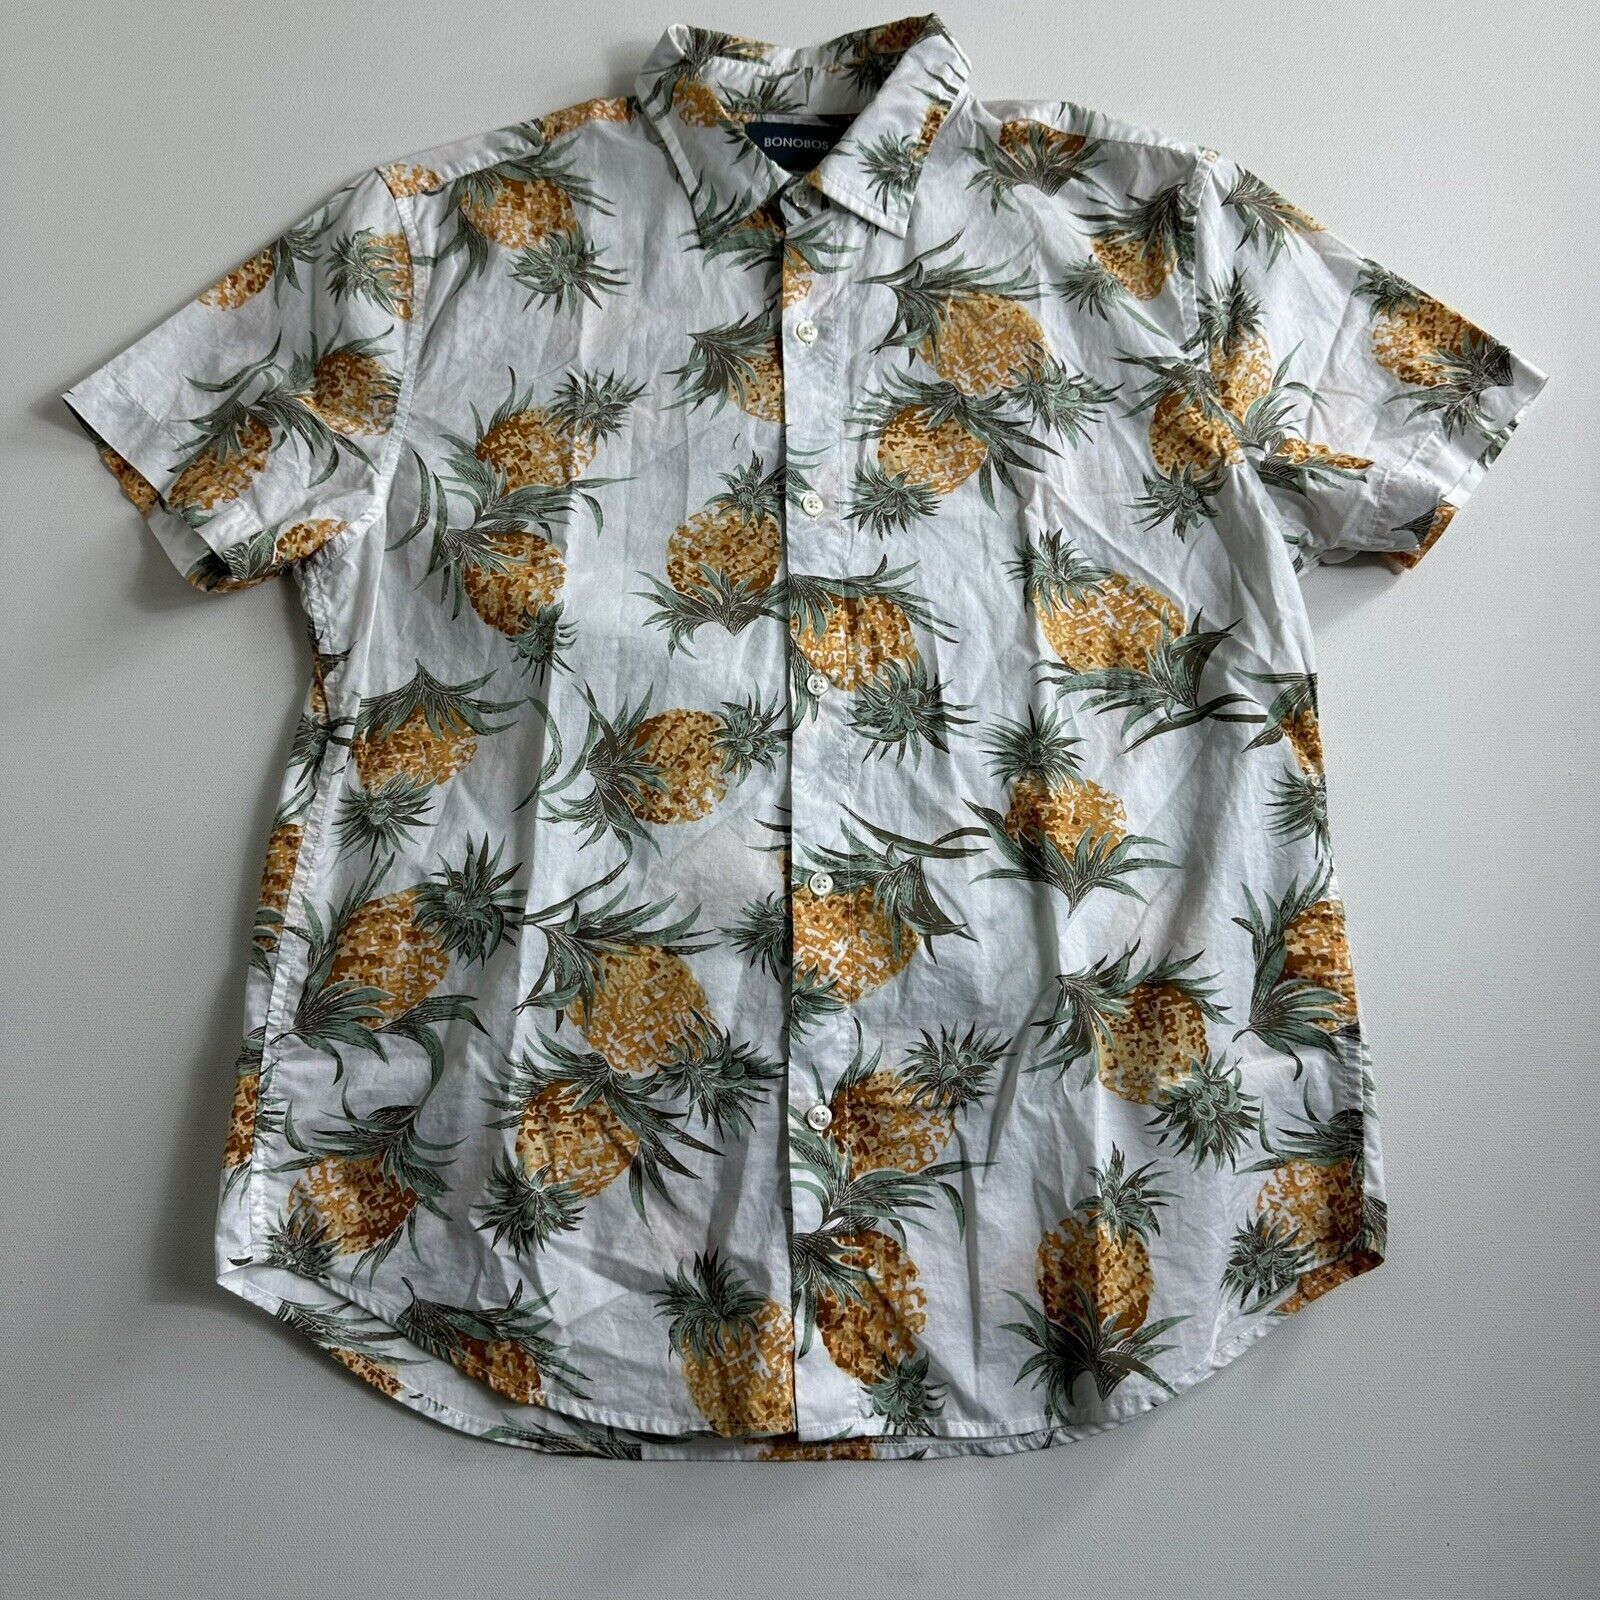 BONOBOS HAWAIIAN PINEAPPLE SLIM FIT SHIRT SIZE LARGE - Shirts